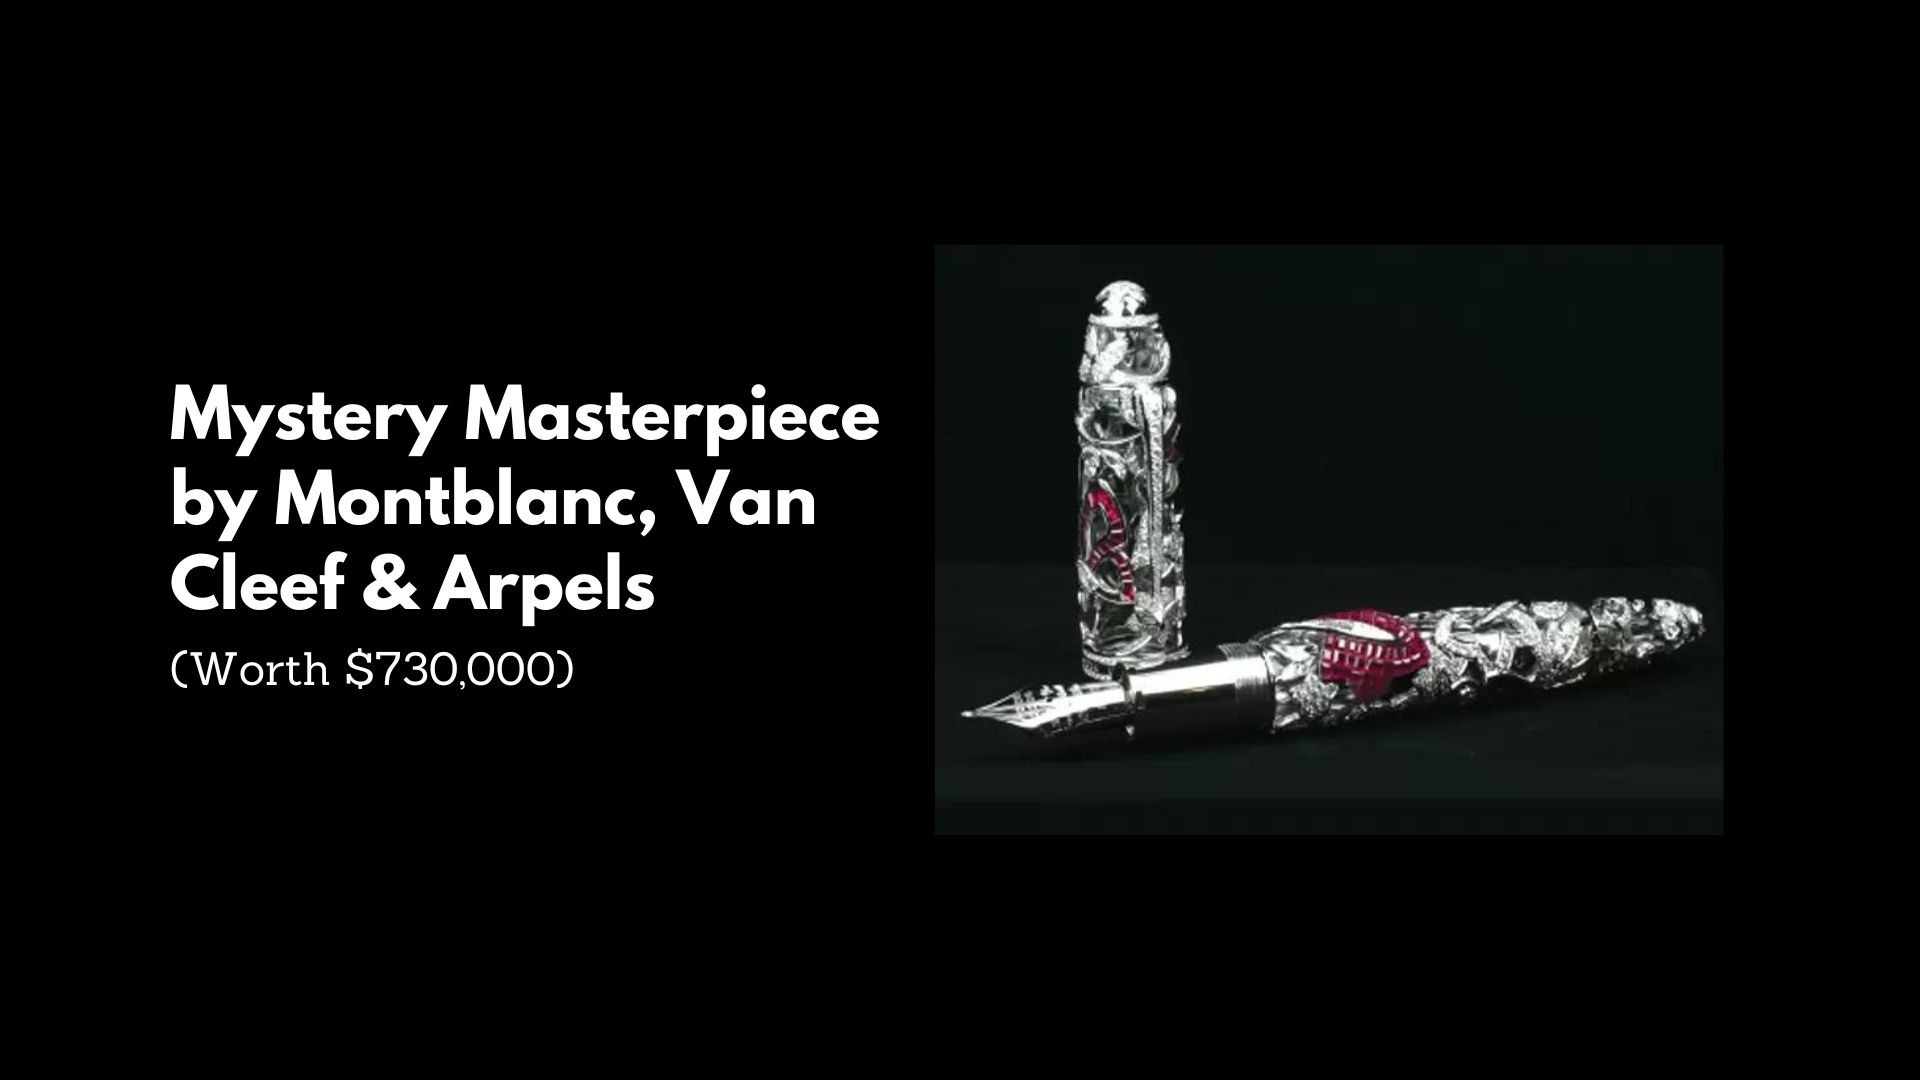 Mystery Masterpiece by Montblanc, Van Cleef & Arpels - (Worth $730,000)